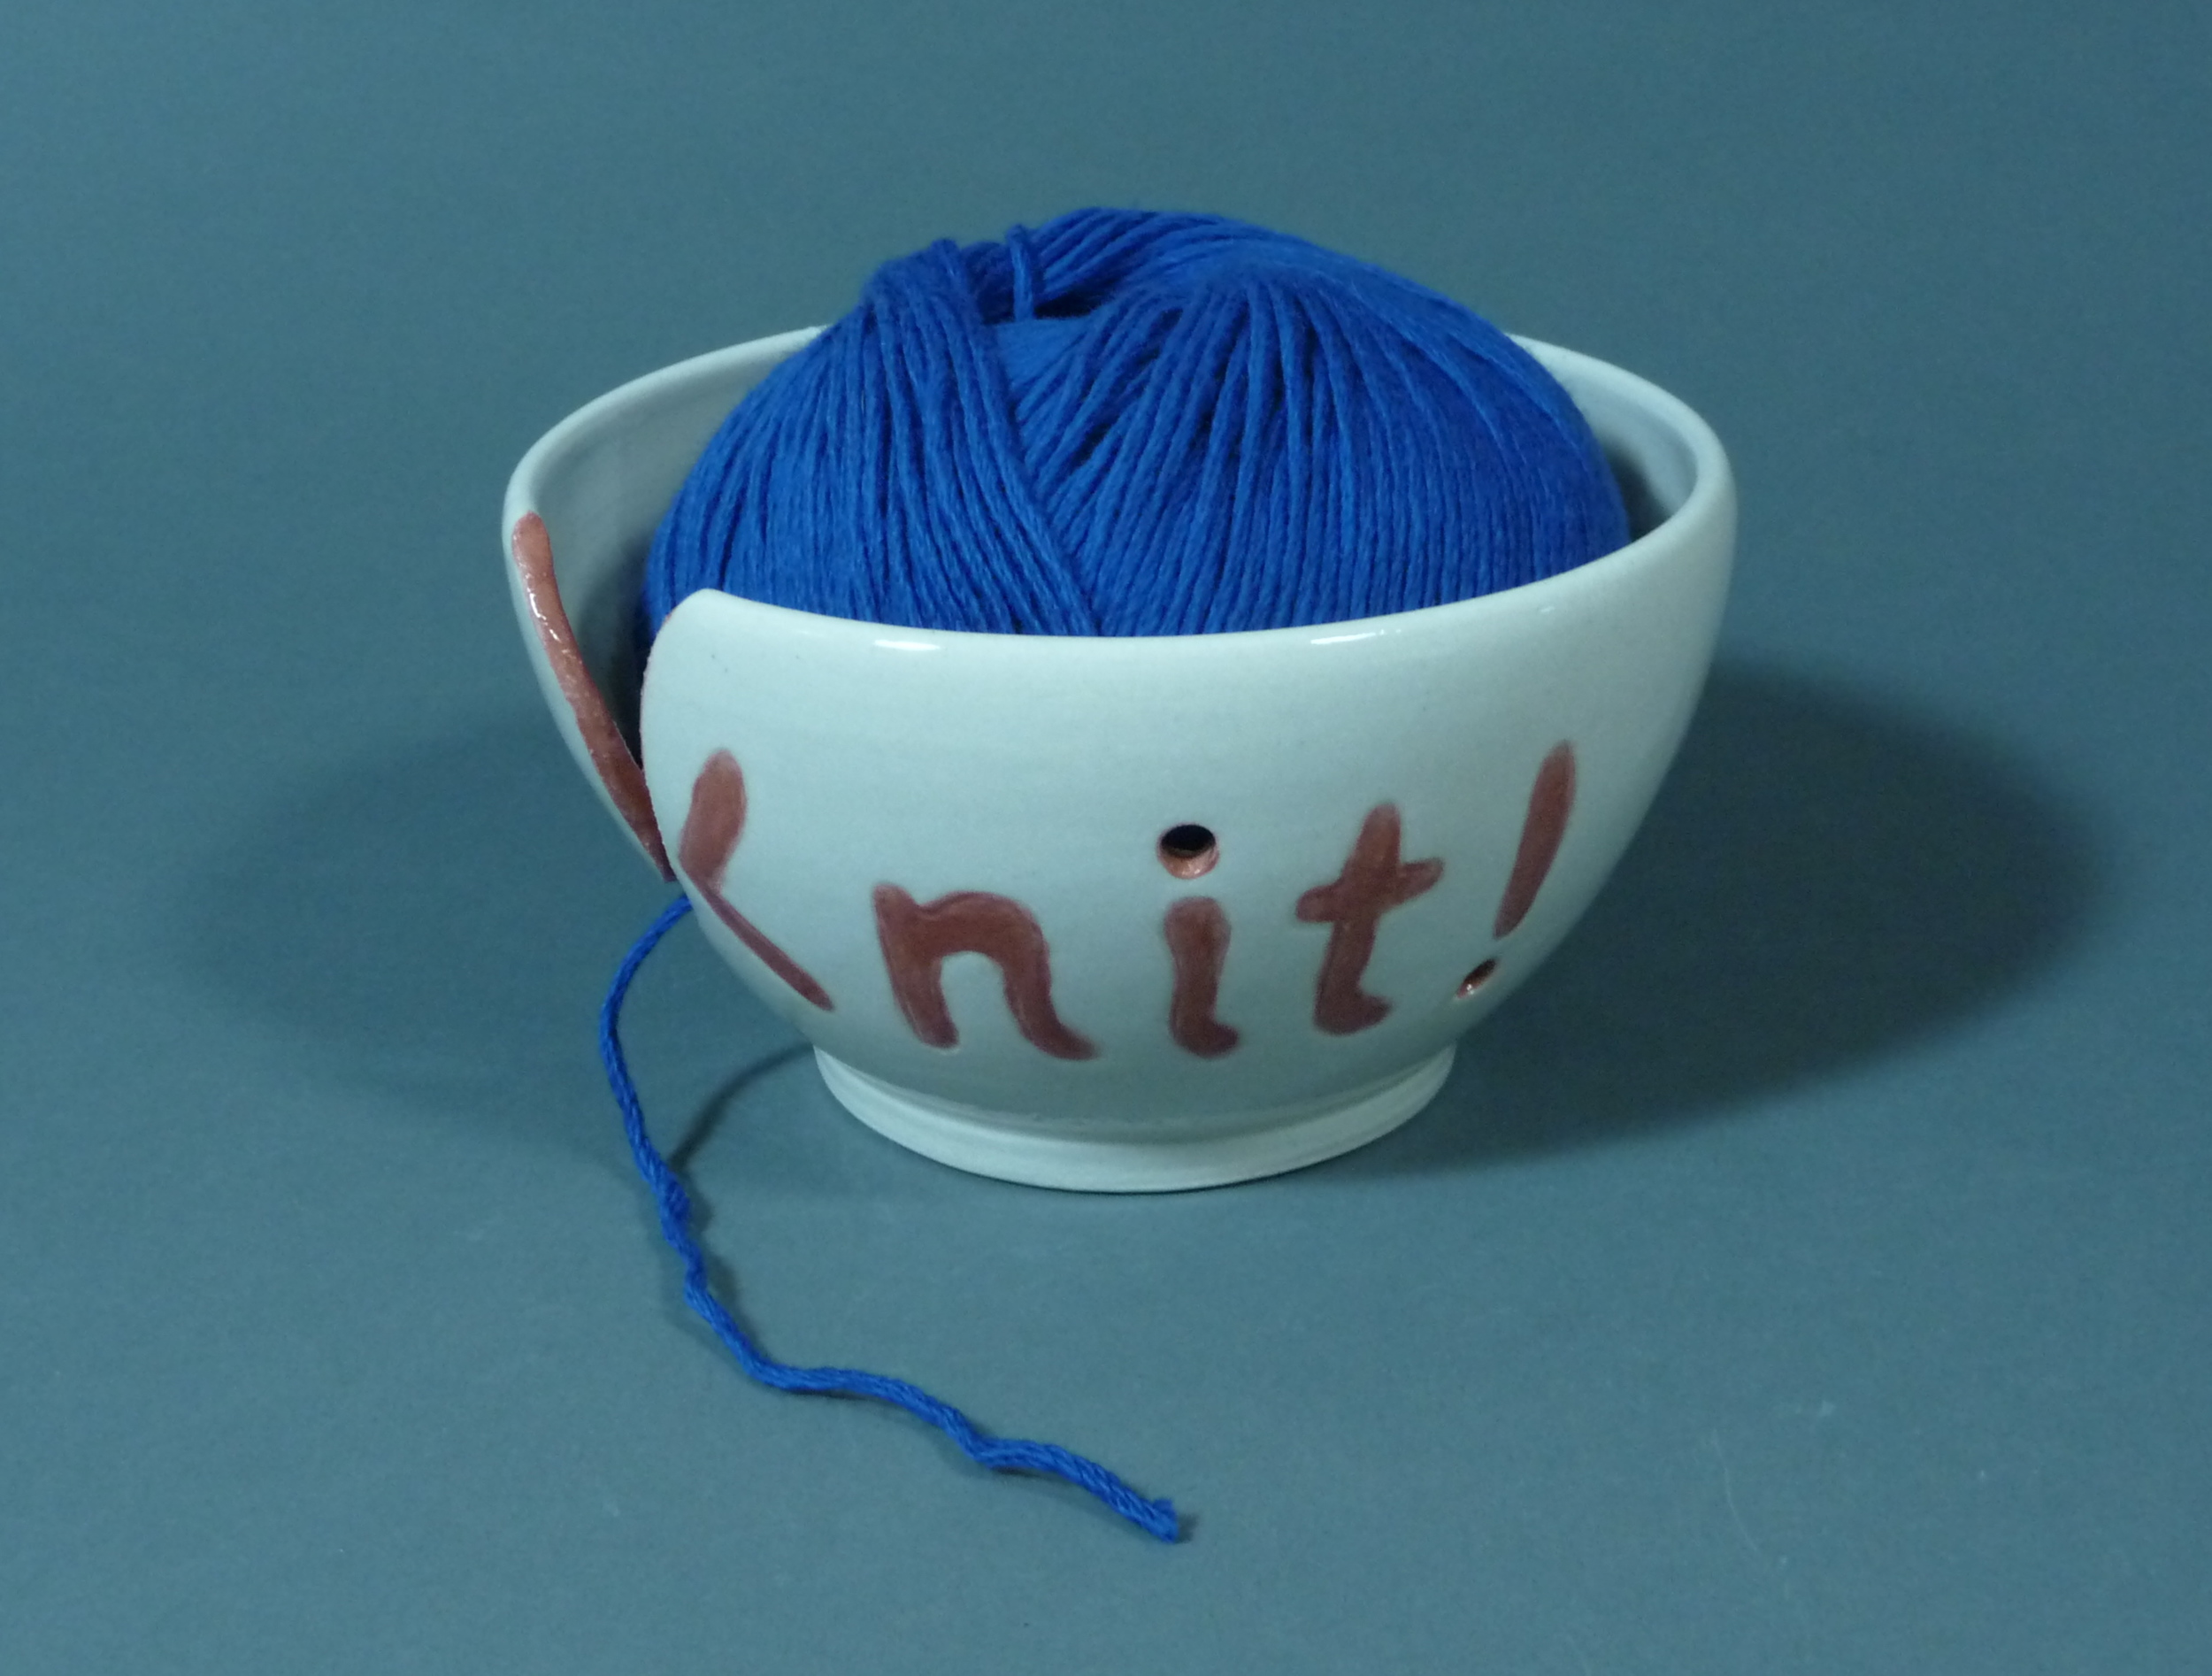 Red knit bowl.JPG